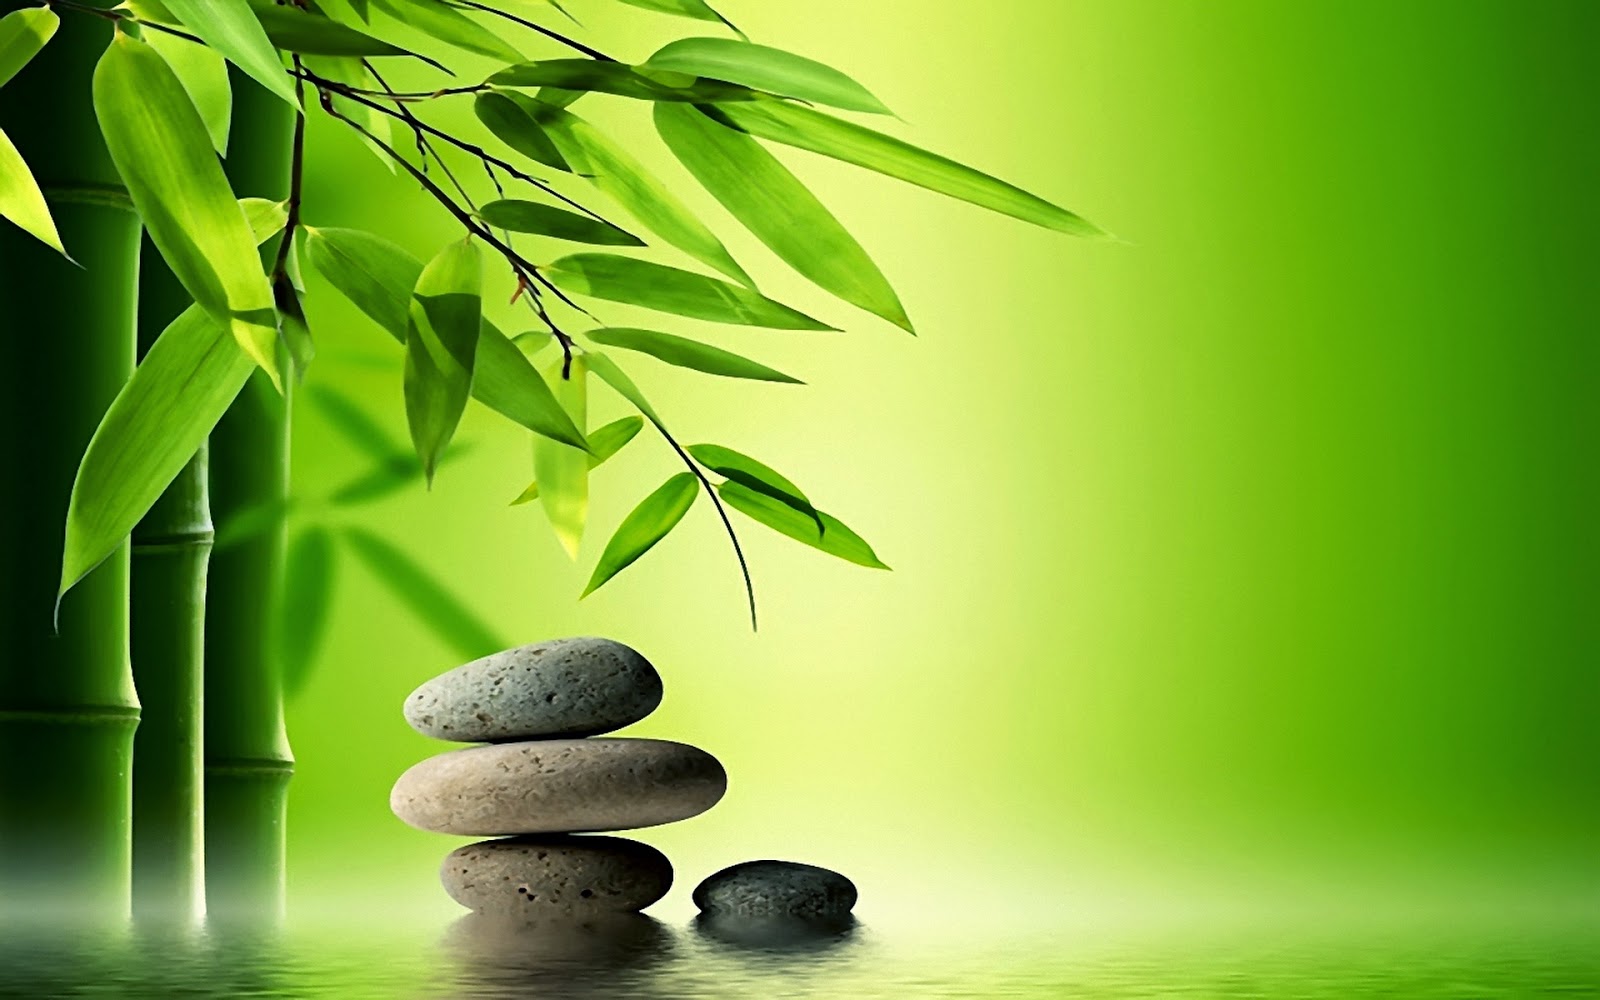 Chinese Zen Meditation Pictures 1080p Full HD Widescreen Wallpaper